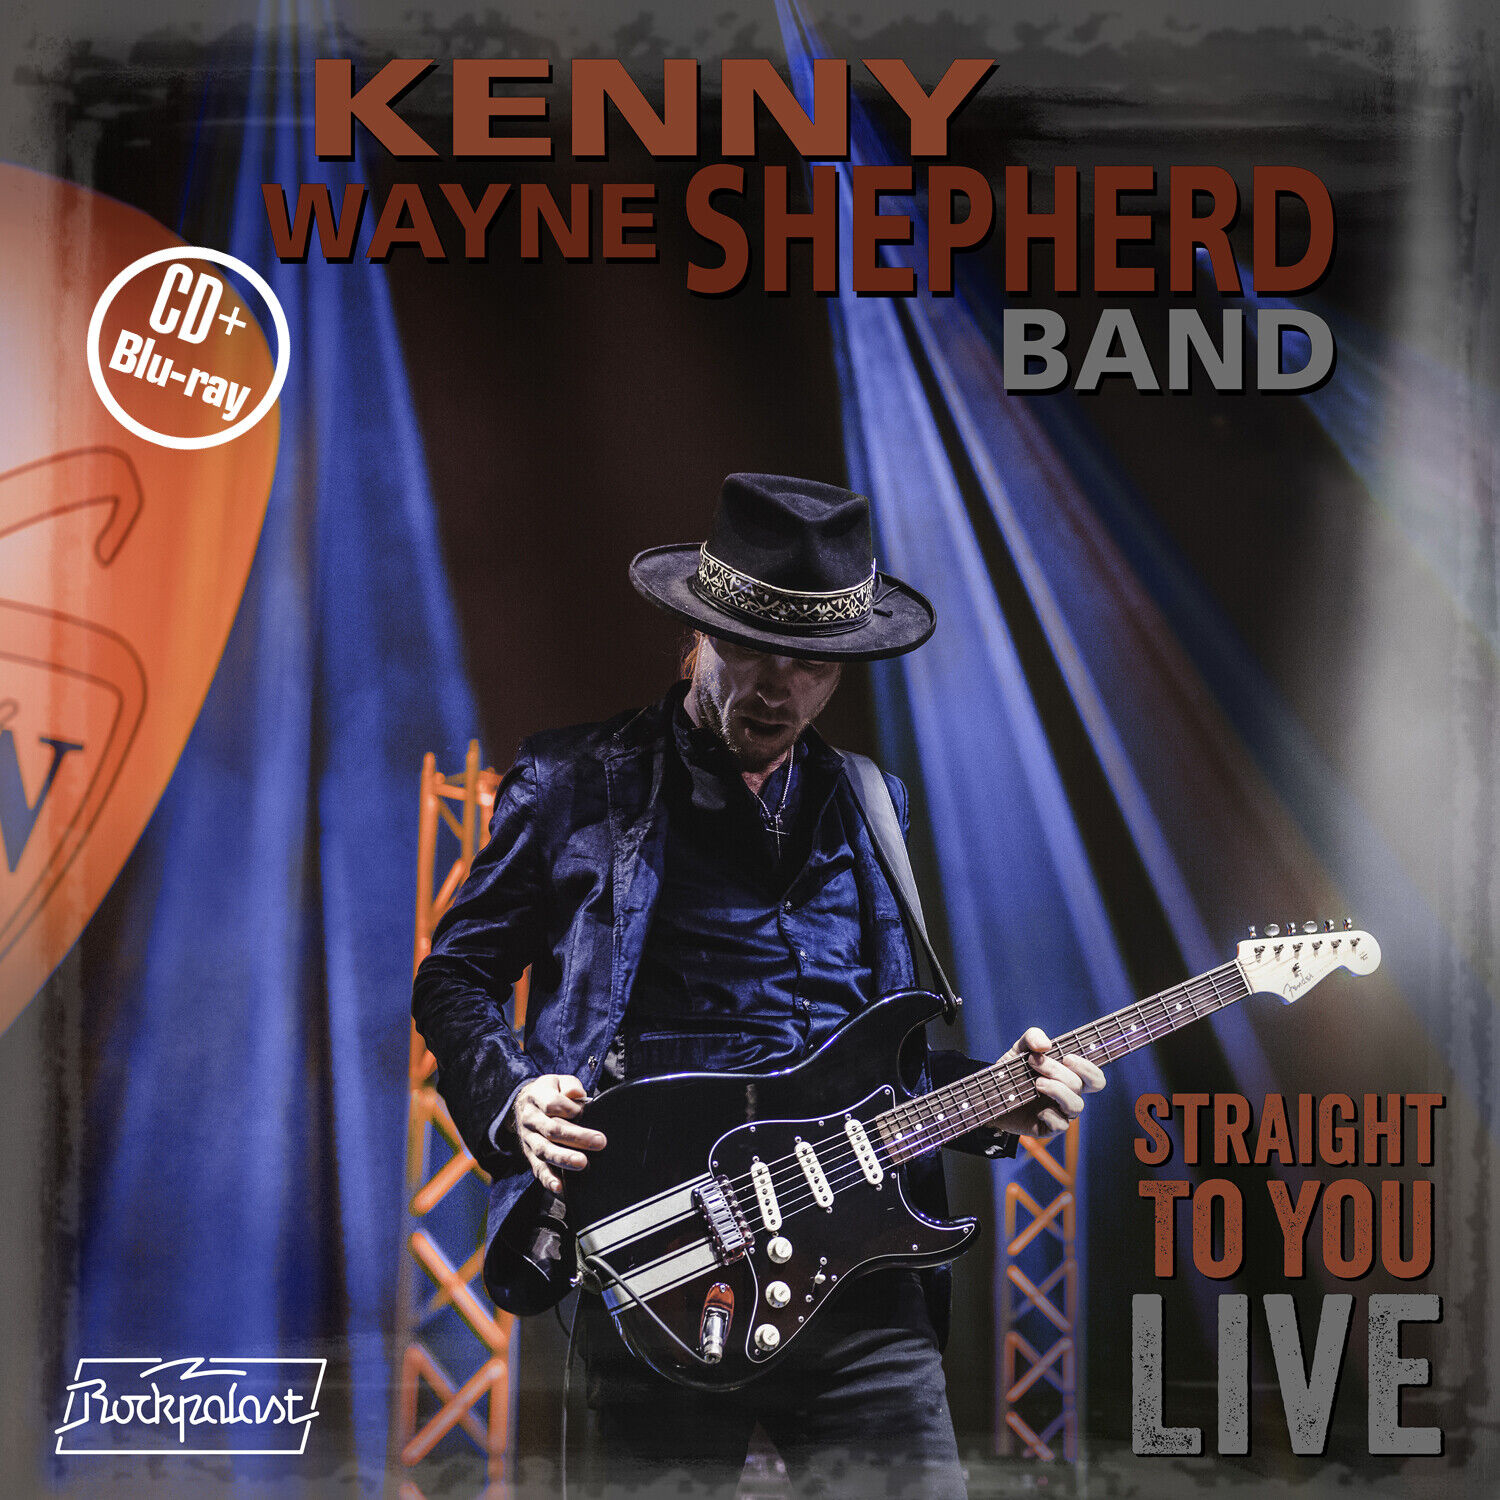 KENNY WAYNE SHEPHERD BAND - STRAIGHT TO YOU: LIVE (3 CD) NEW BLU-RAY DISC